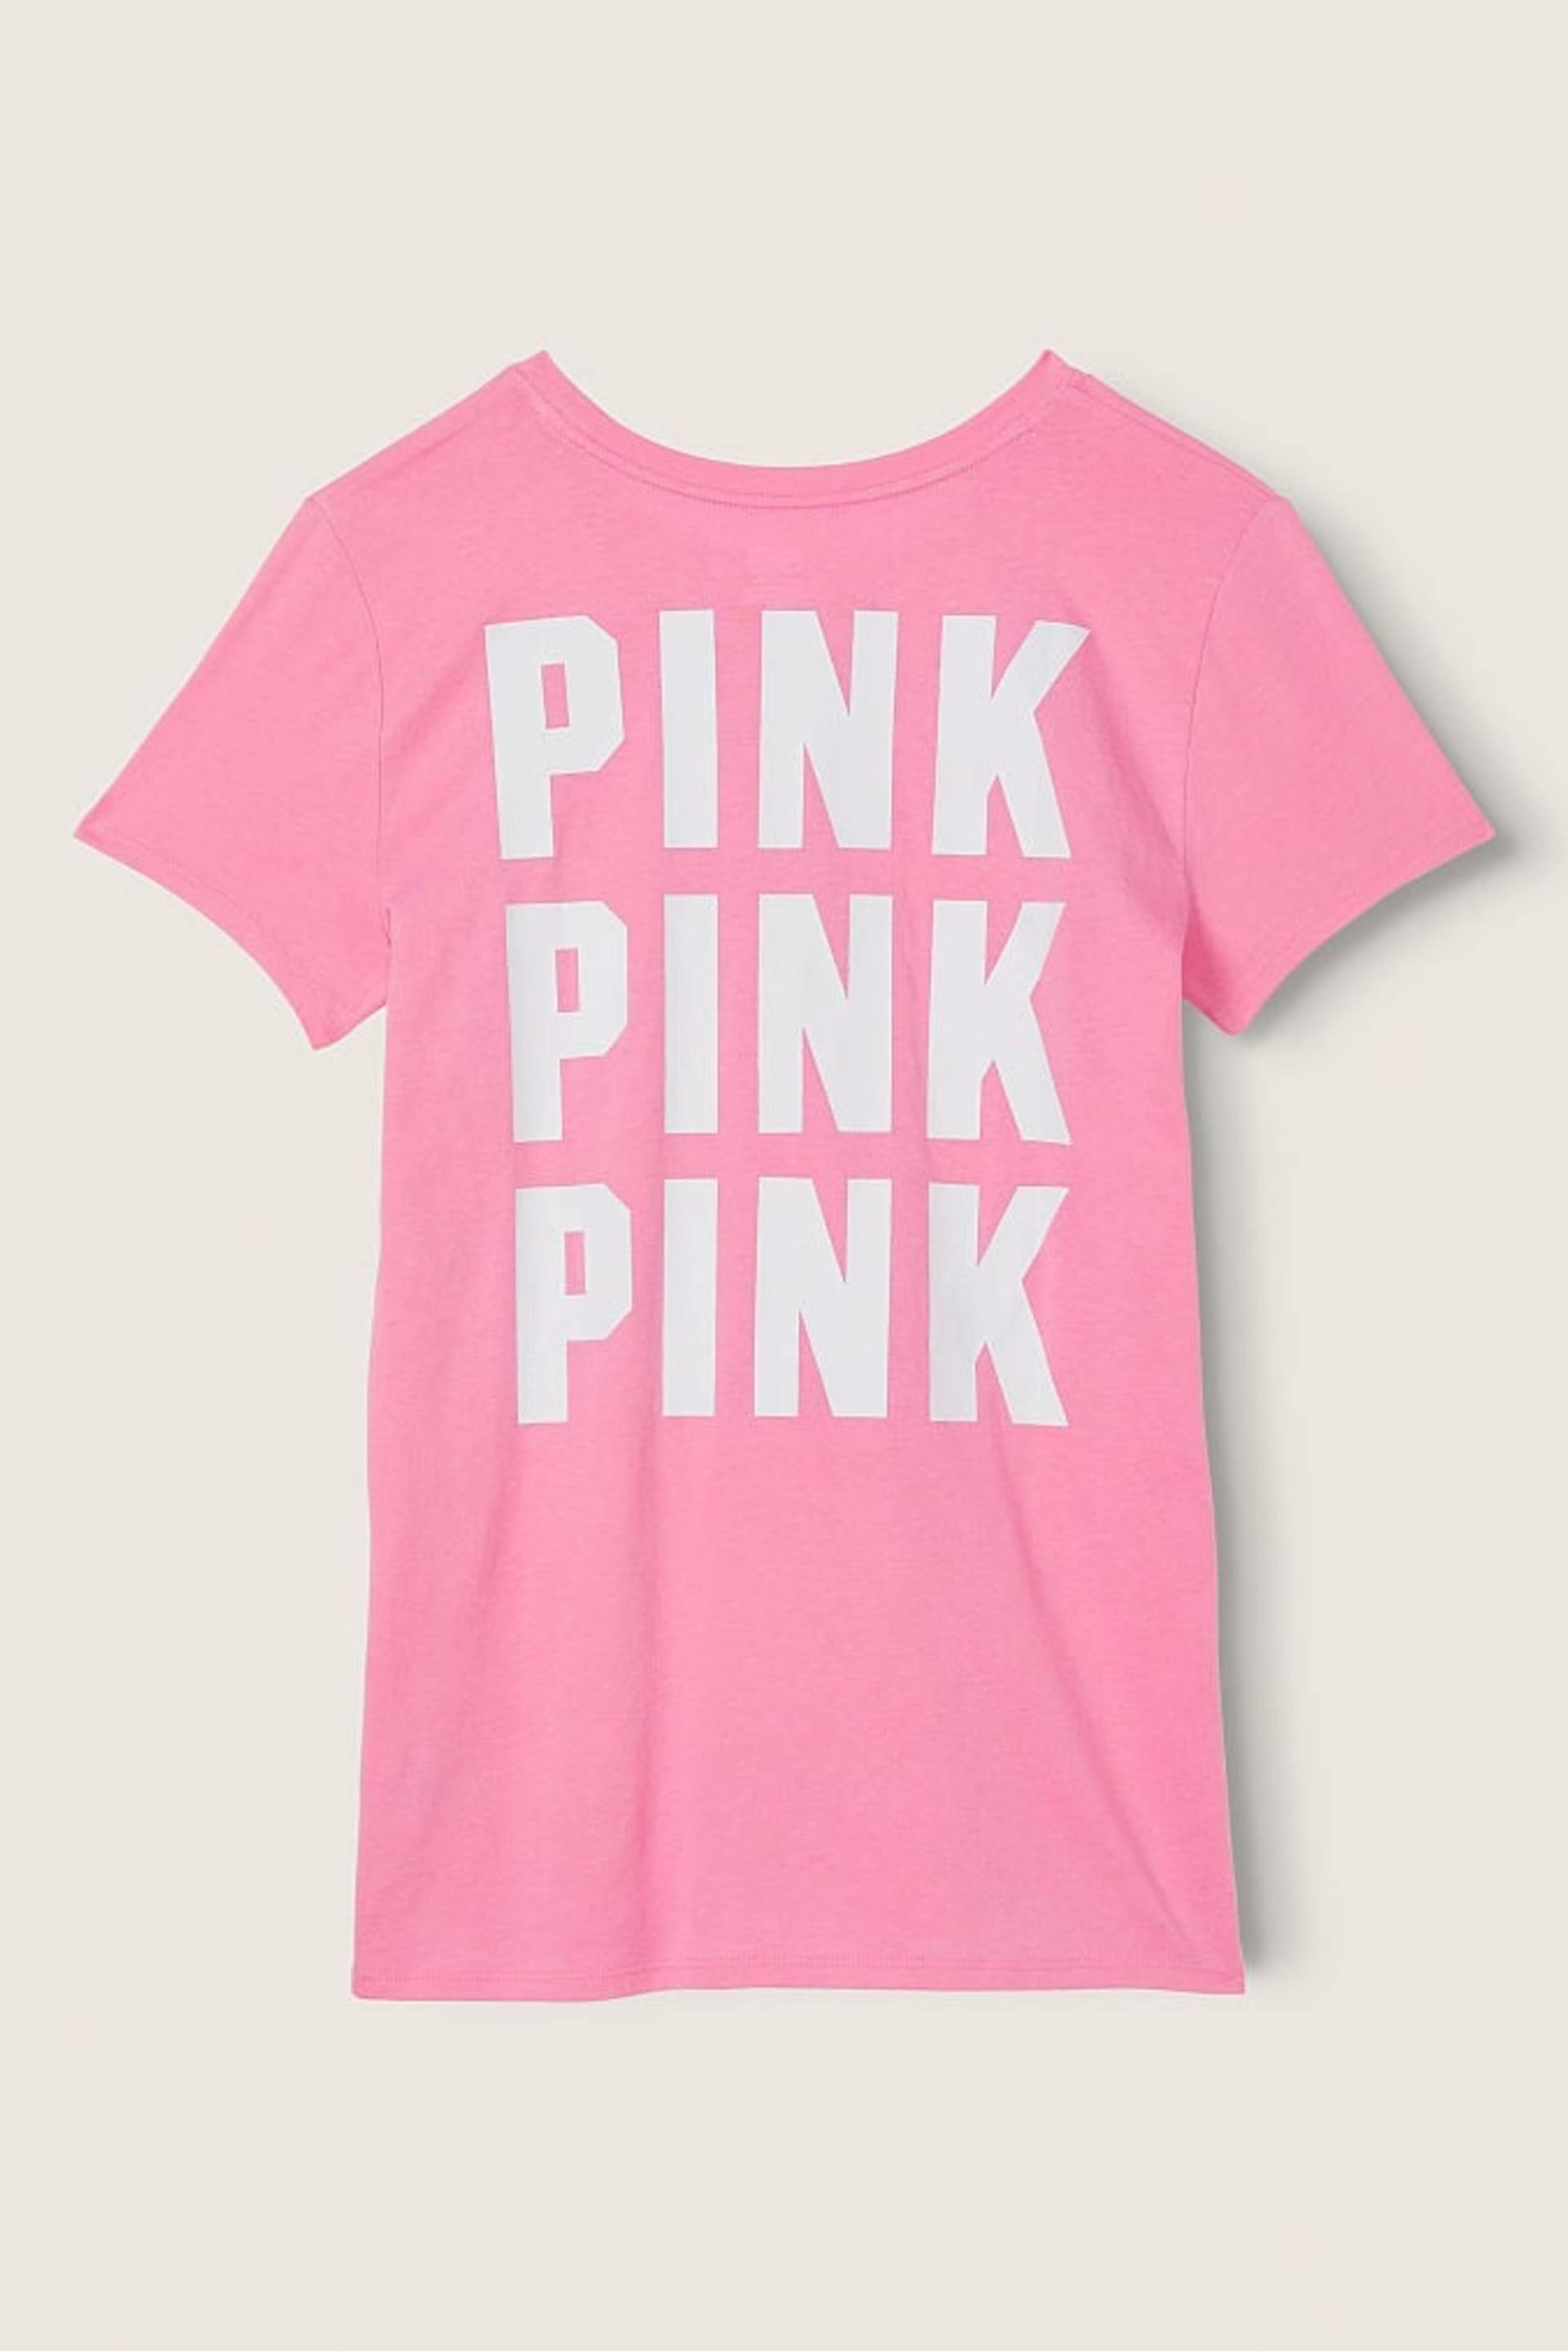 Victoria's Secret PINK Dreamy Pink Logo Short Sleeve T-Shirt - Image 5 of 5